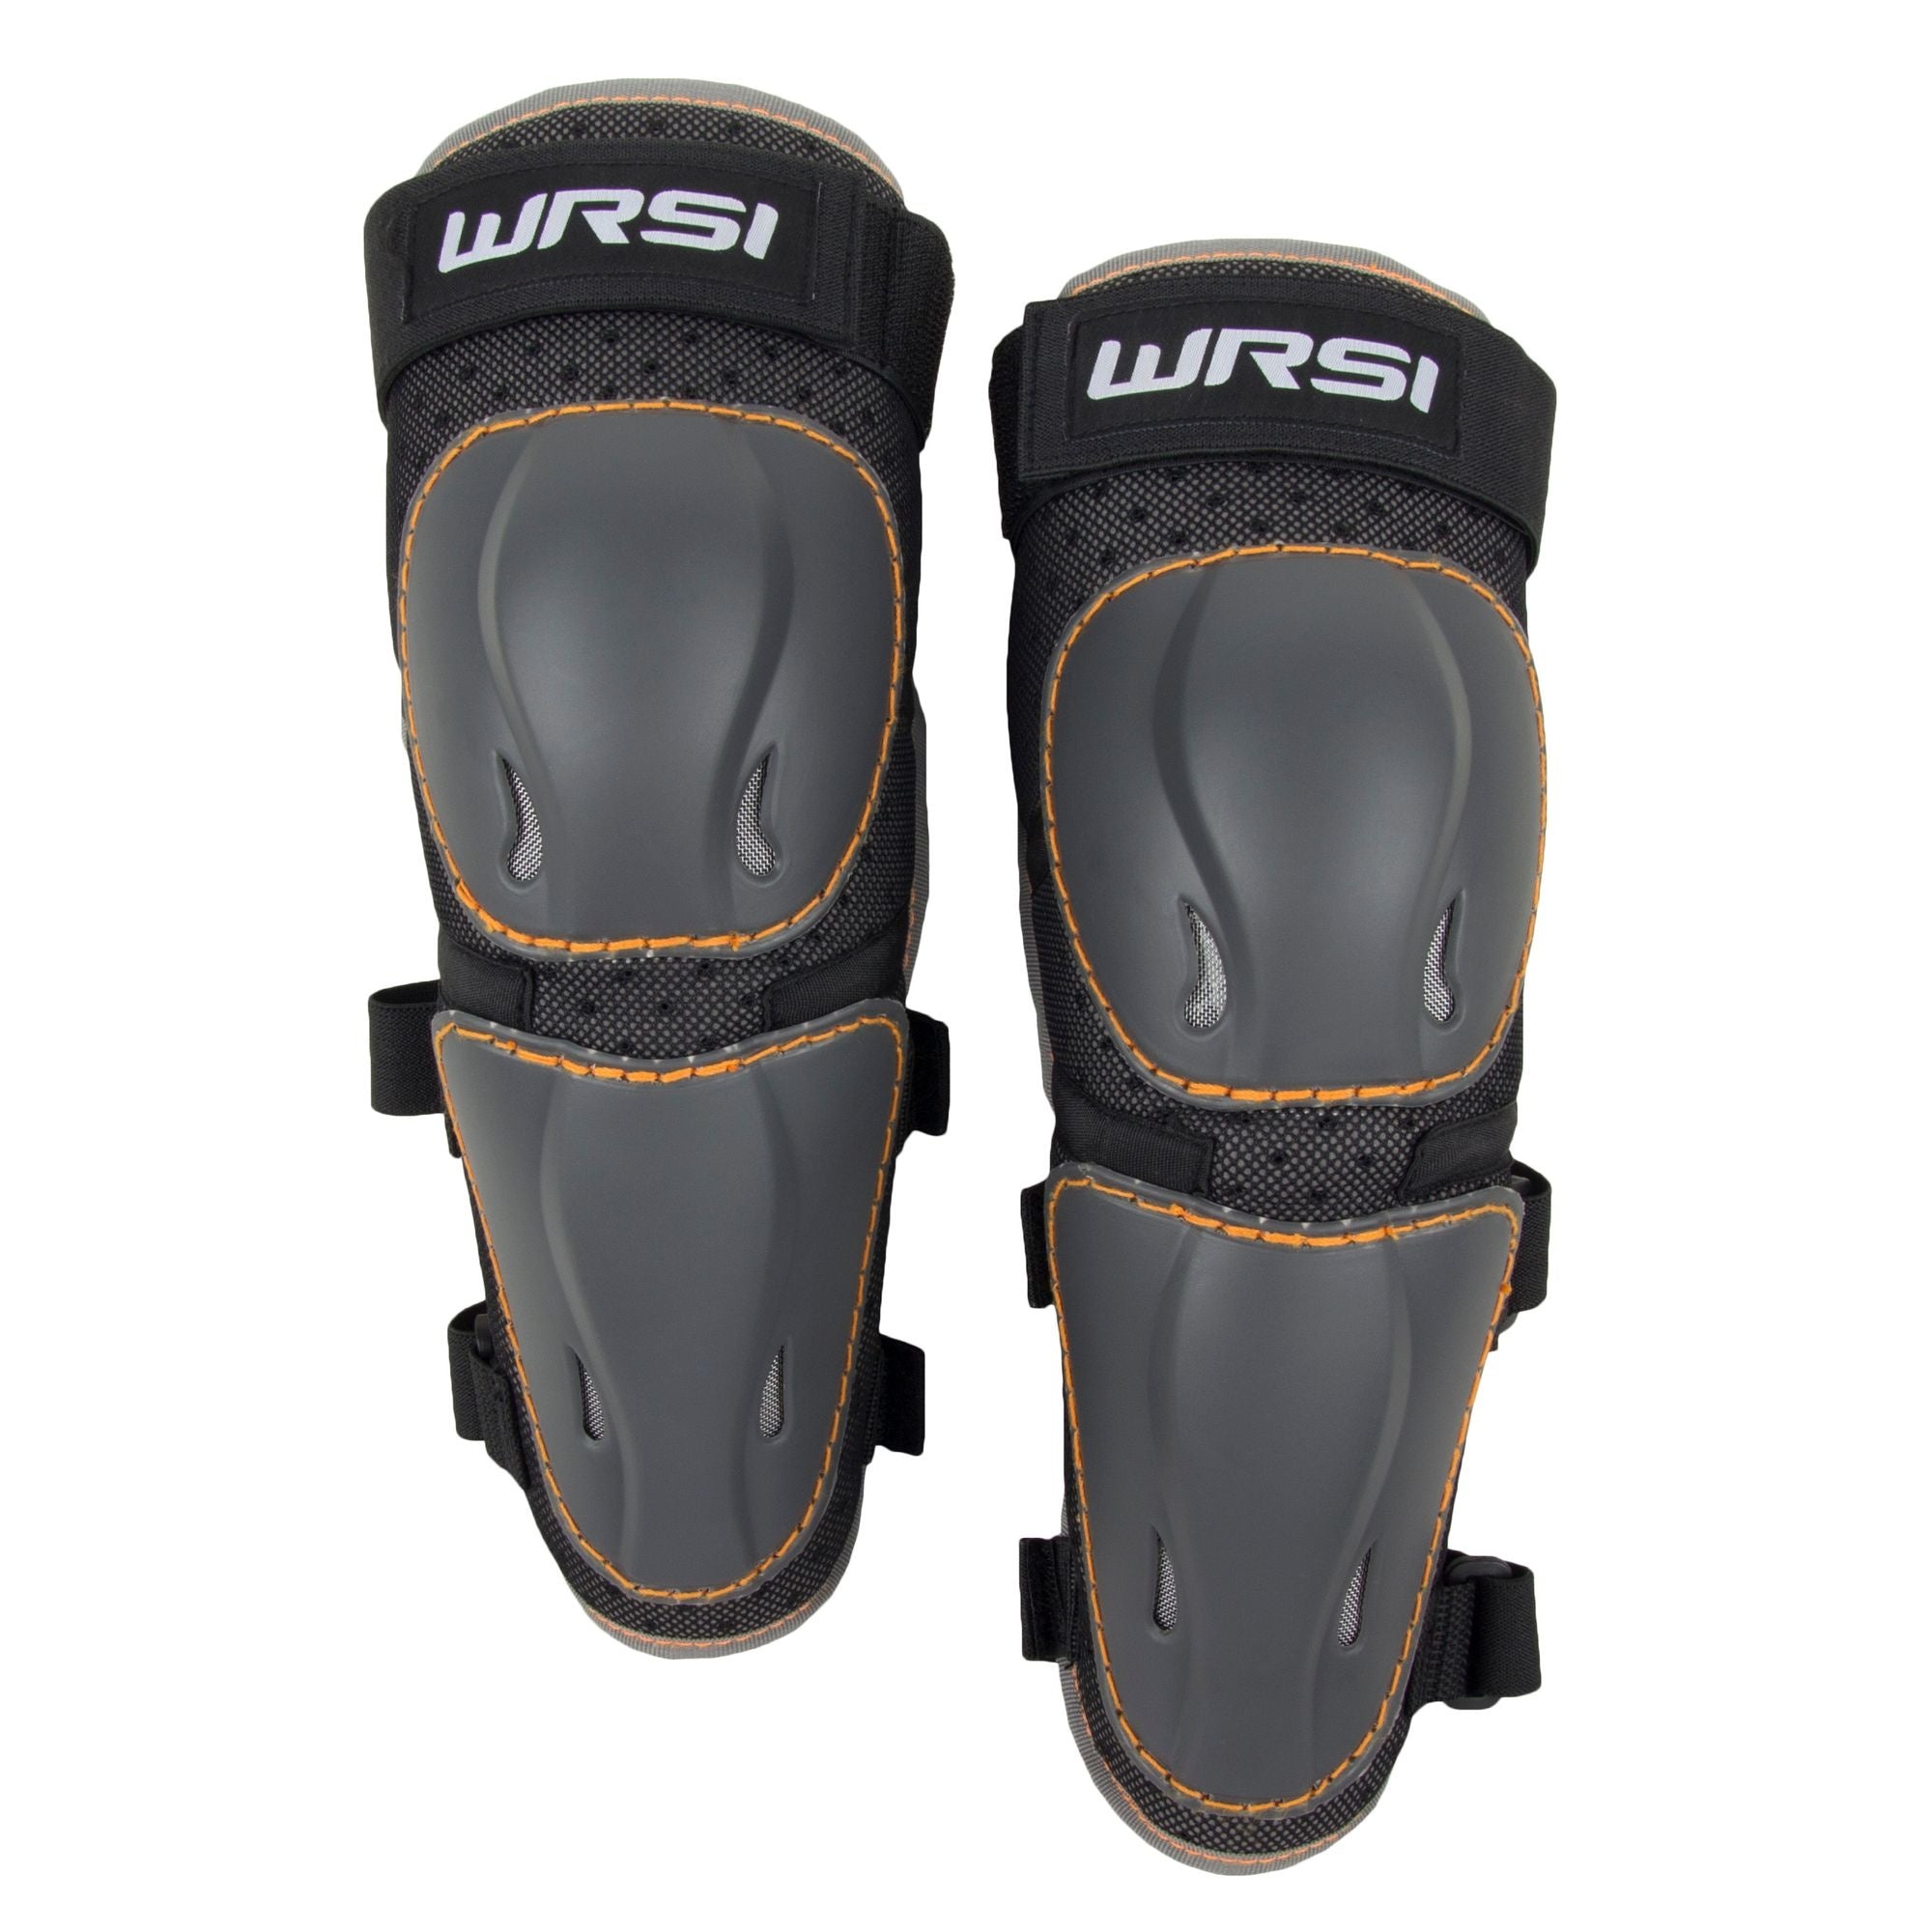 WRSI - S-Turn Elbow Pads